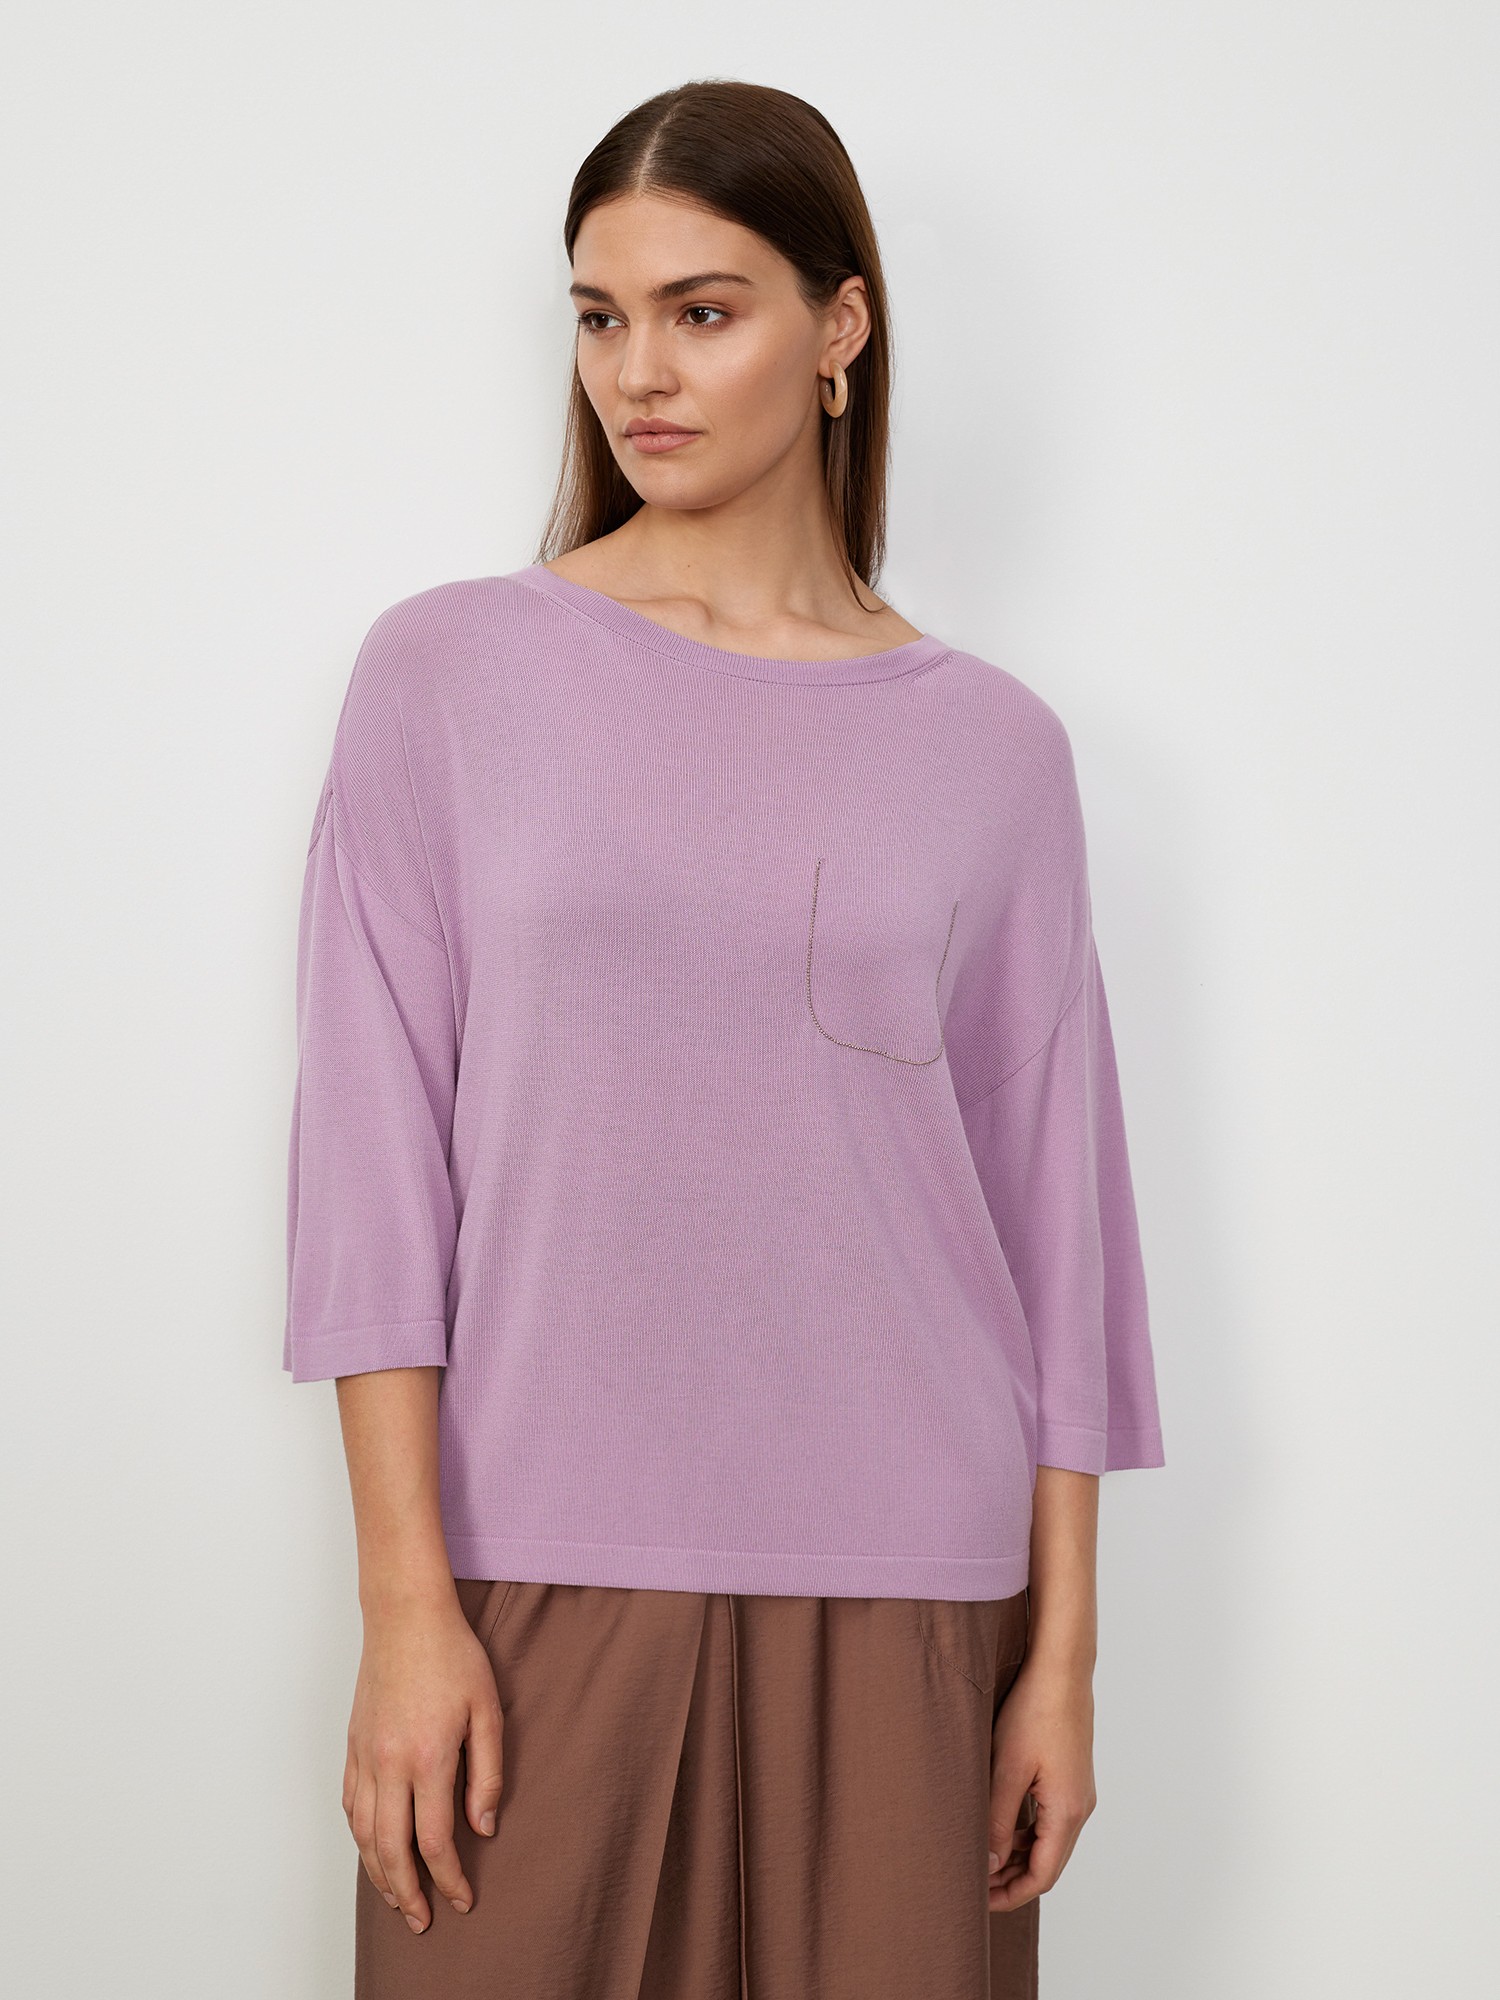 Блуза вязаная с монилью Lalis BL1069V, цвет фиолетовый, размер 48 - фото 1